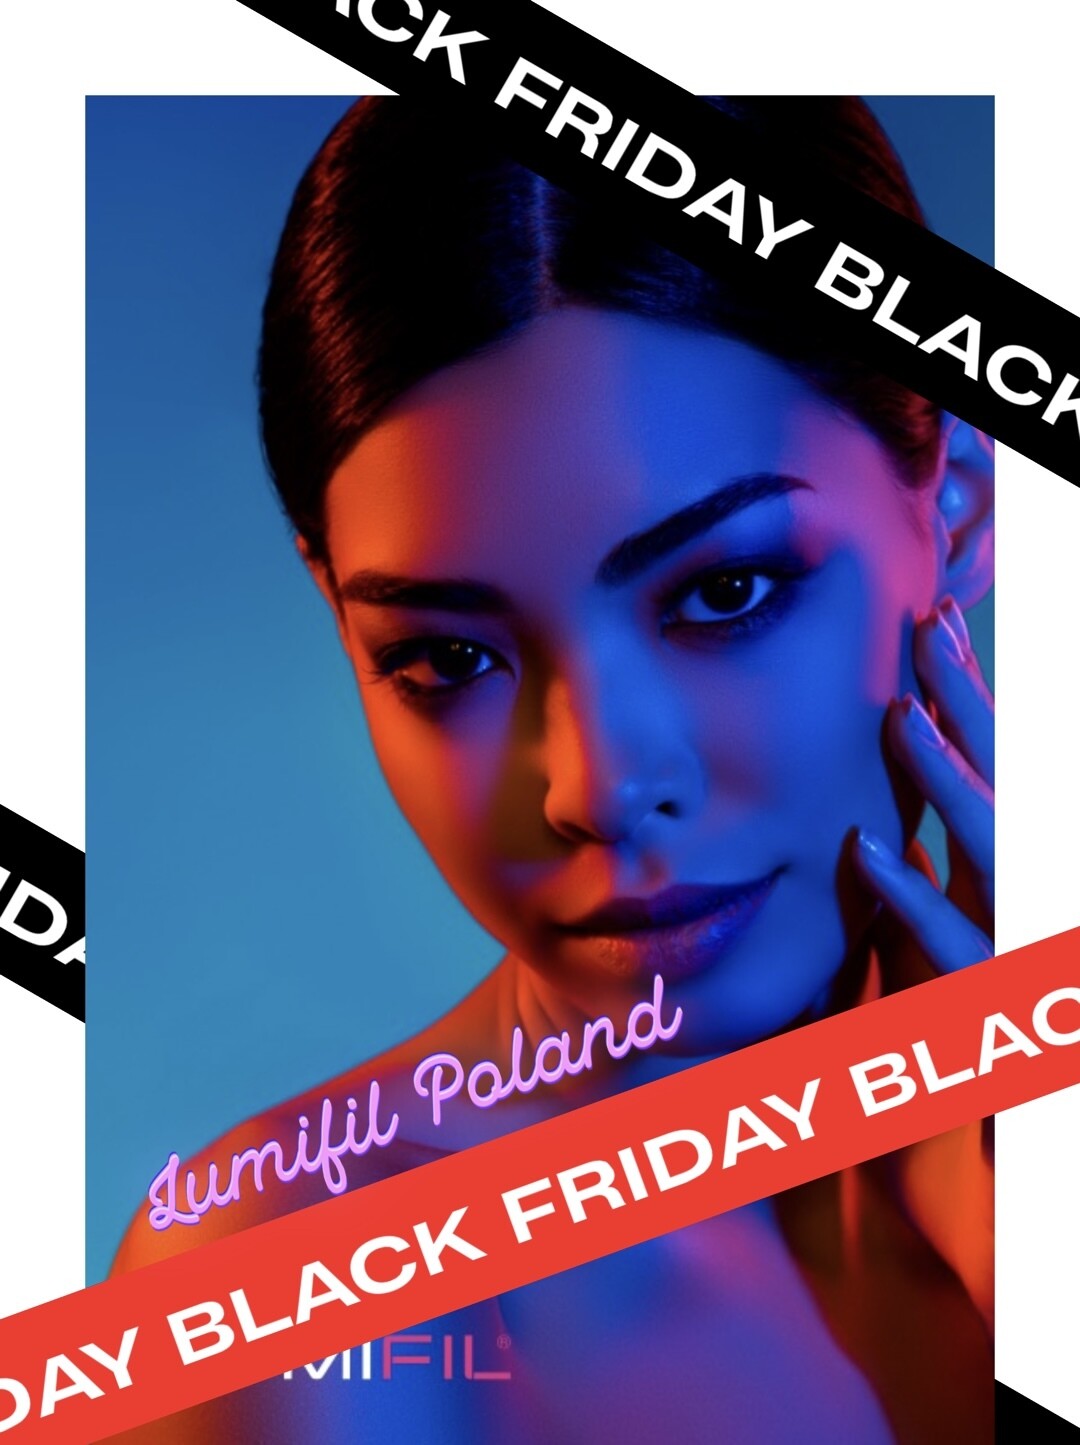 Lumifil Bundle Black Friday Deals 
(40 + products)